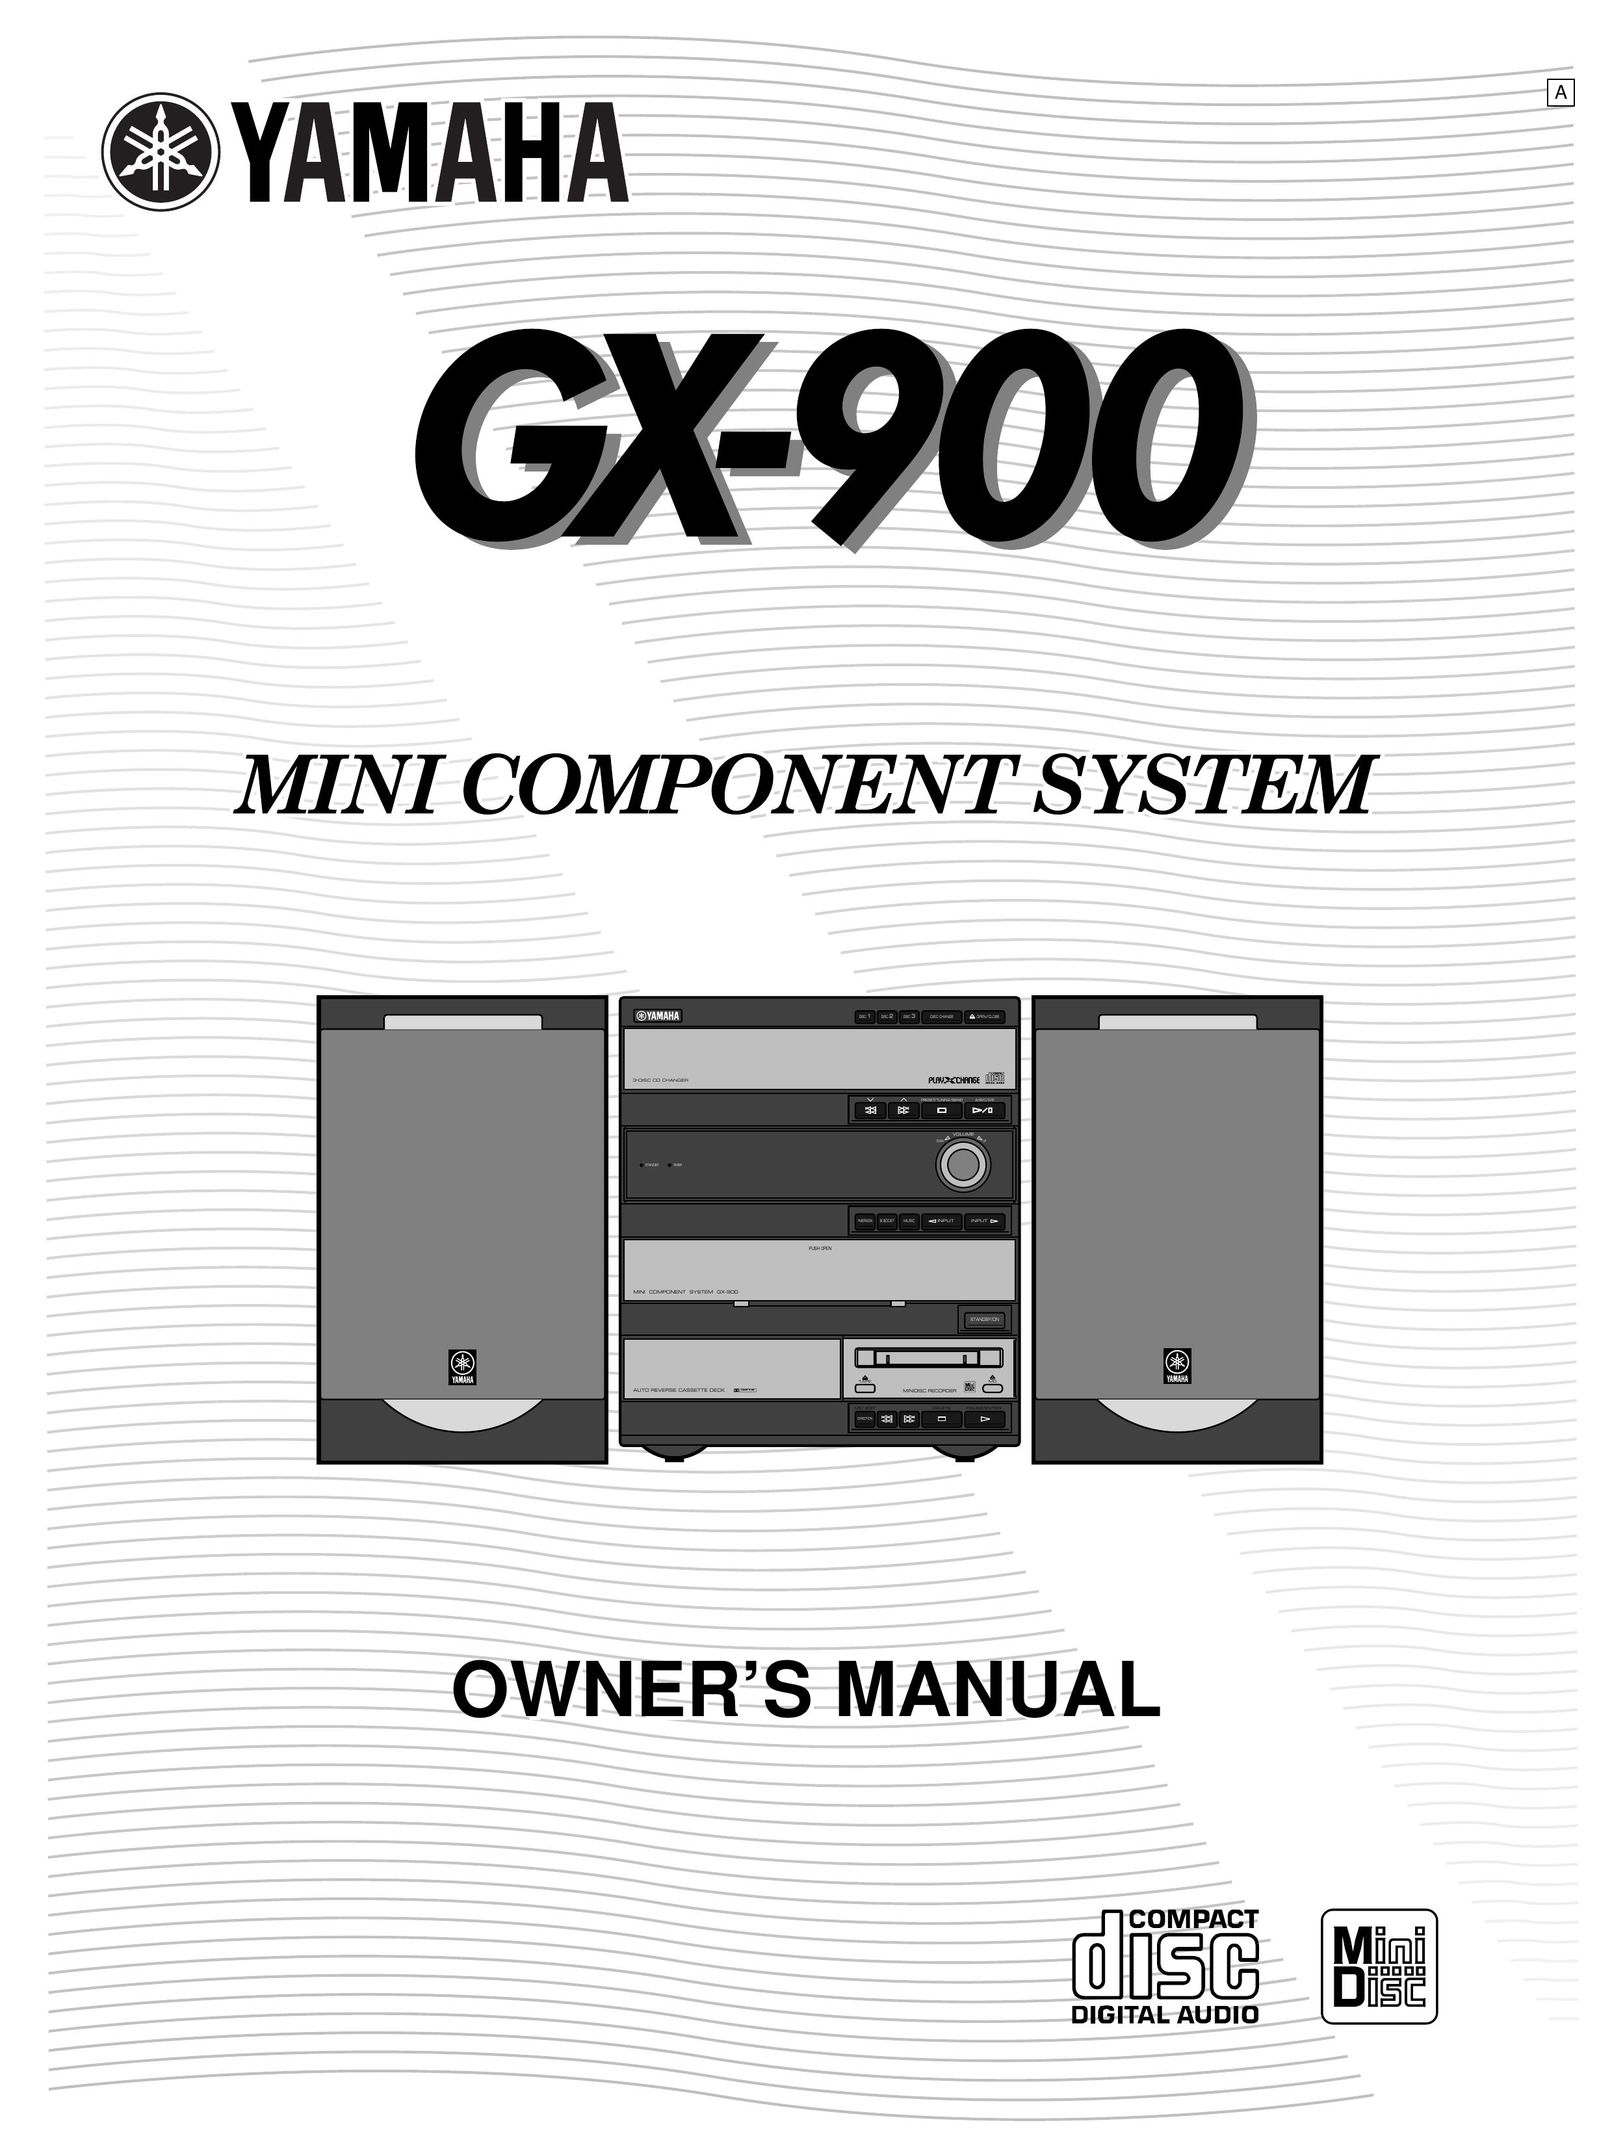 Yamaha GX-900 Stereo System User Manual